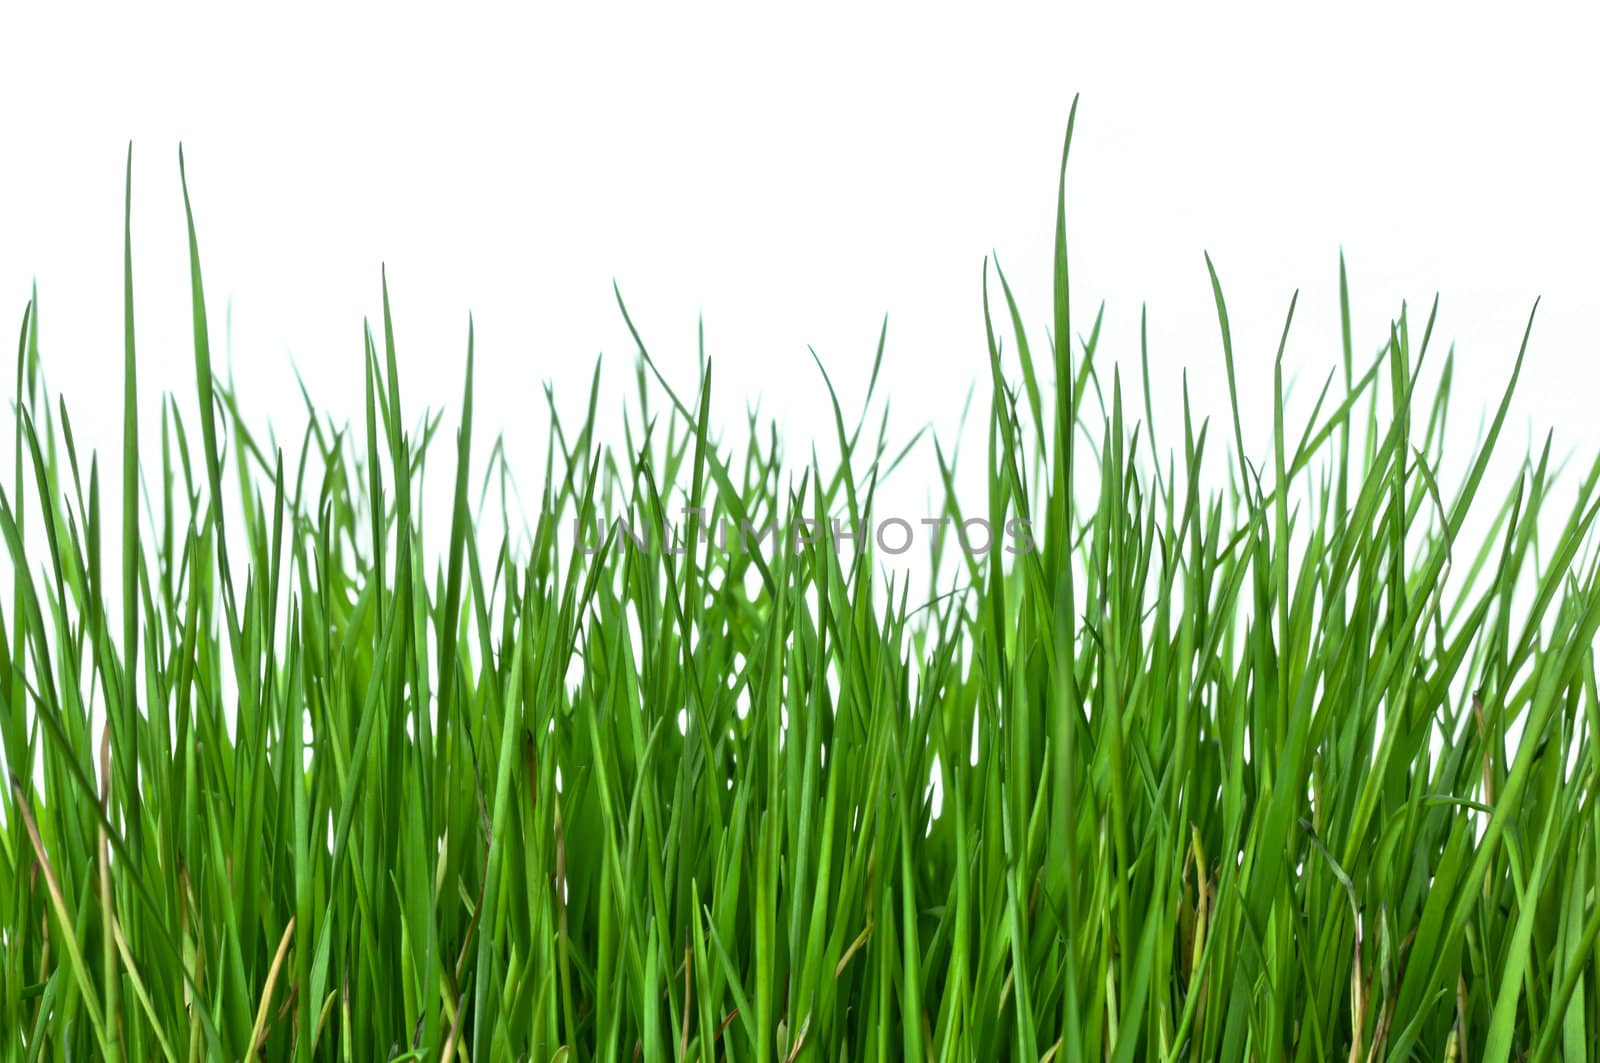 Grass on white background horizontal by dmitryelagin